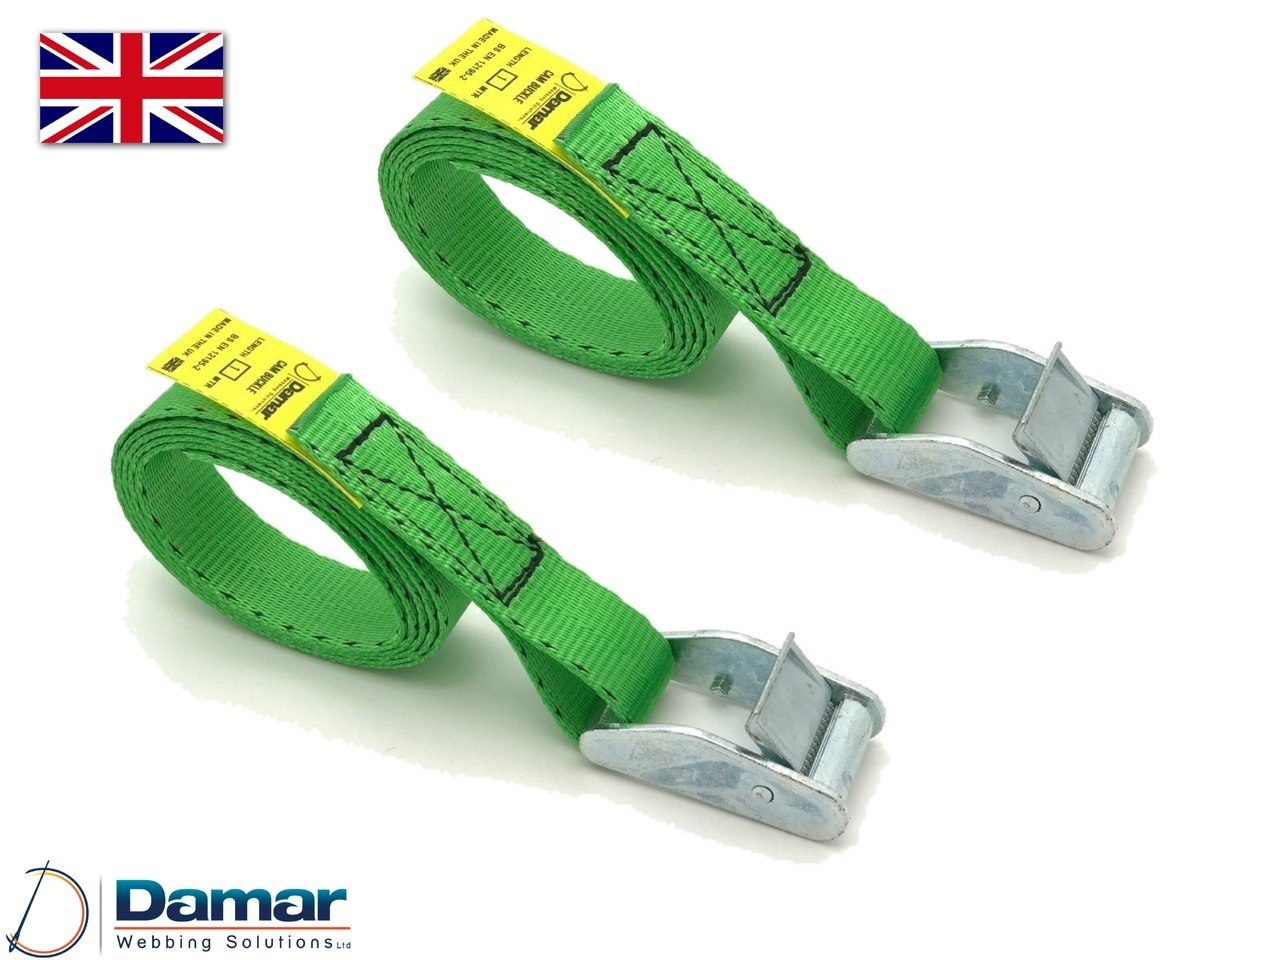 Quantity 2 - Cam buckle tie down straps 25mm wide 2mtr long GREEN - Damar Webbing Solutions Ltd